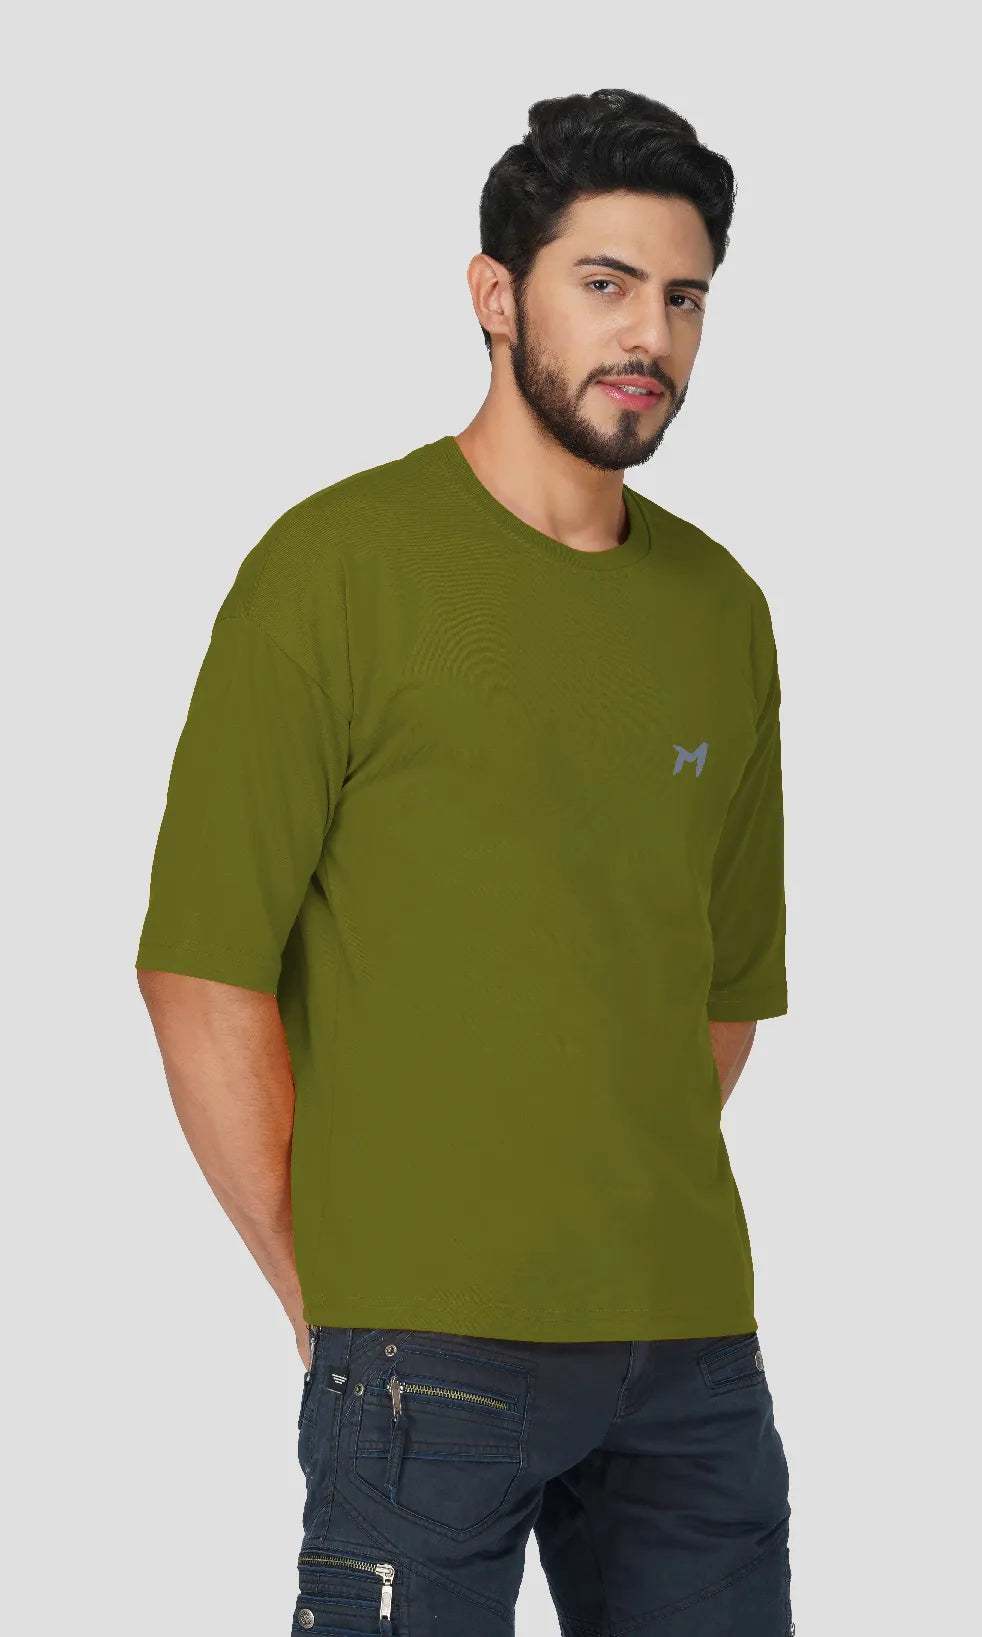 Mebadass Cotton Men's OverSized/Baggy Dropshoulder T-shirts - Olive Green